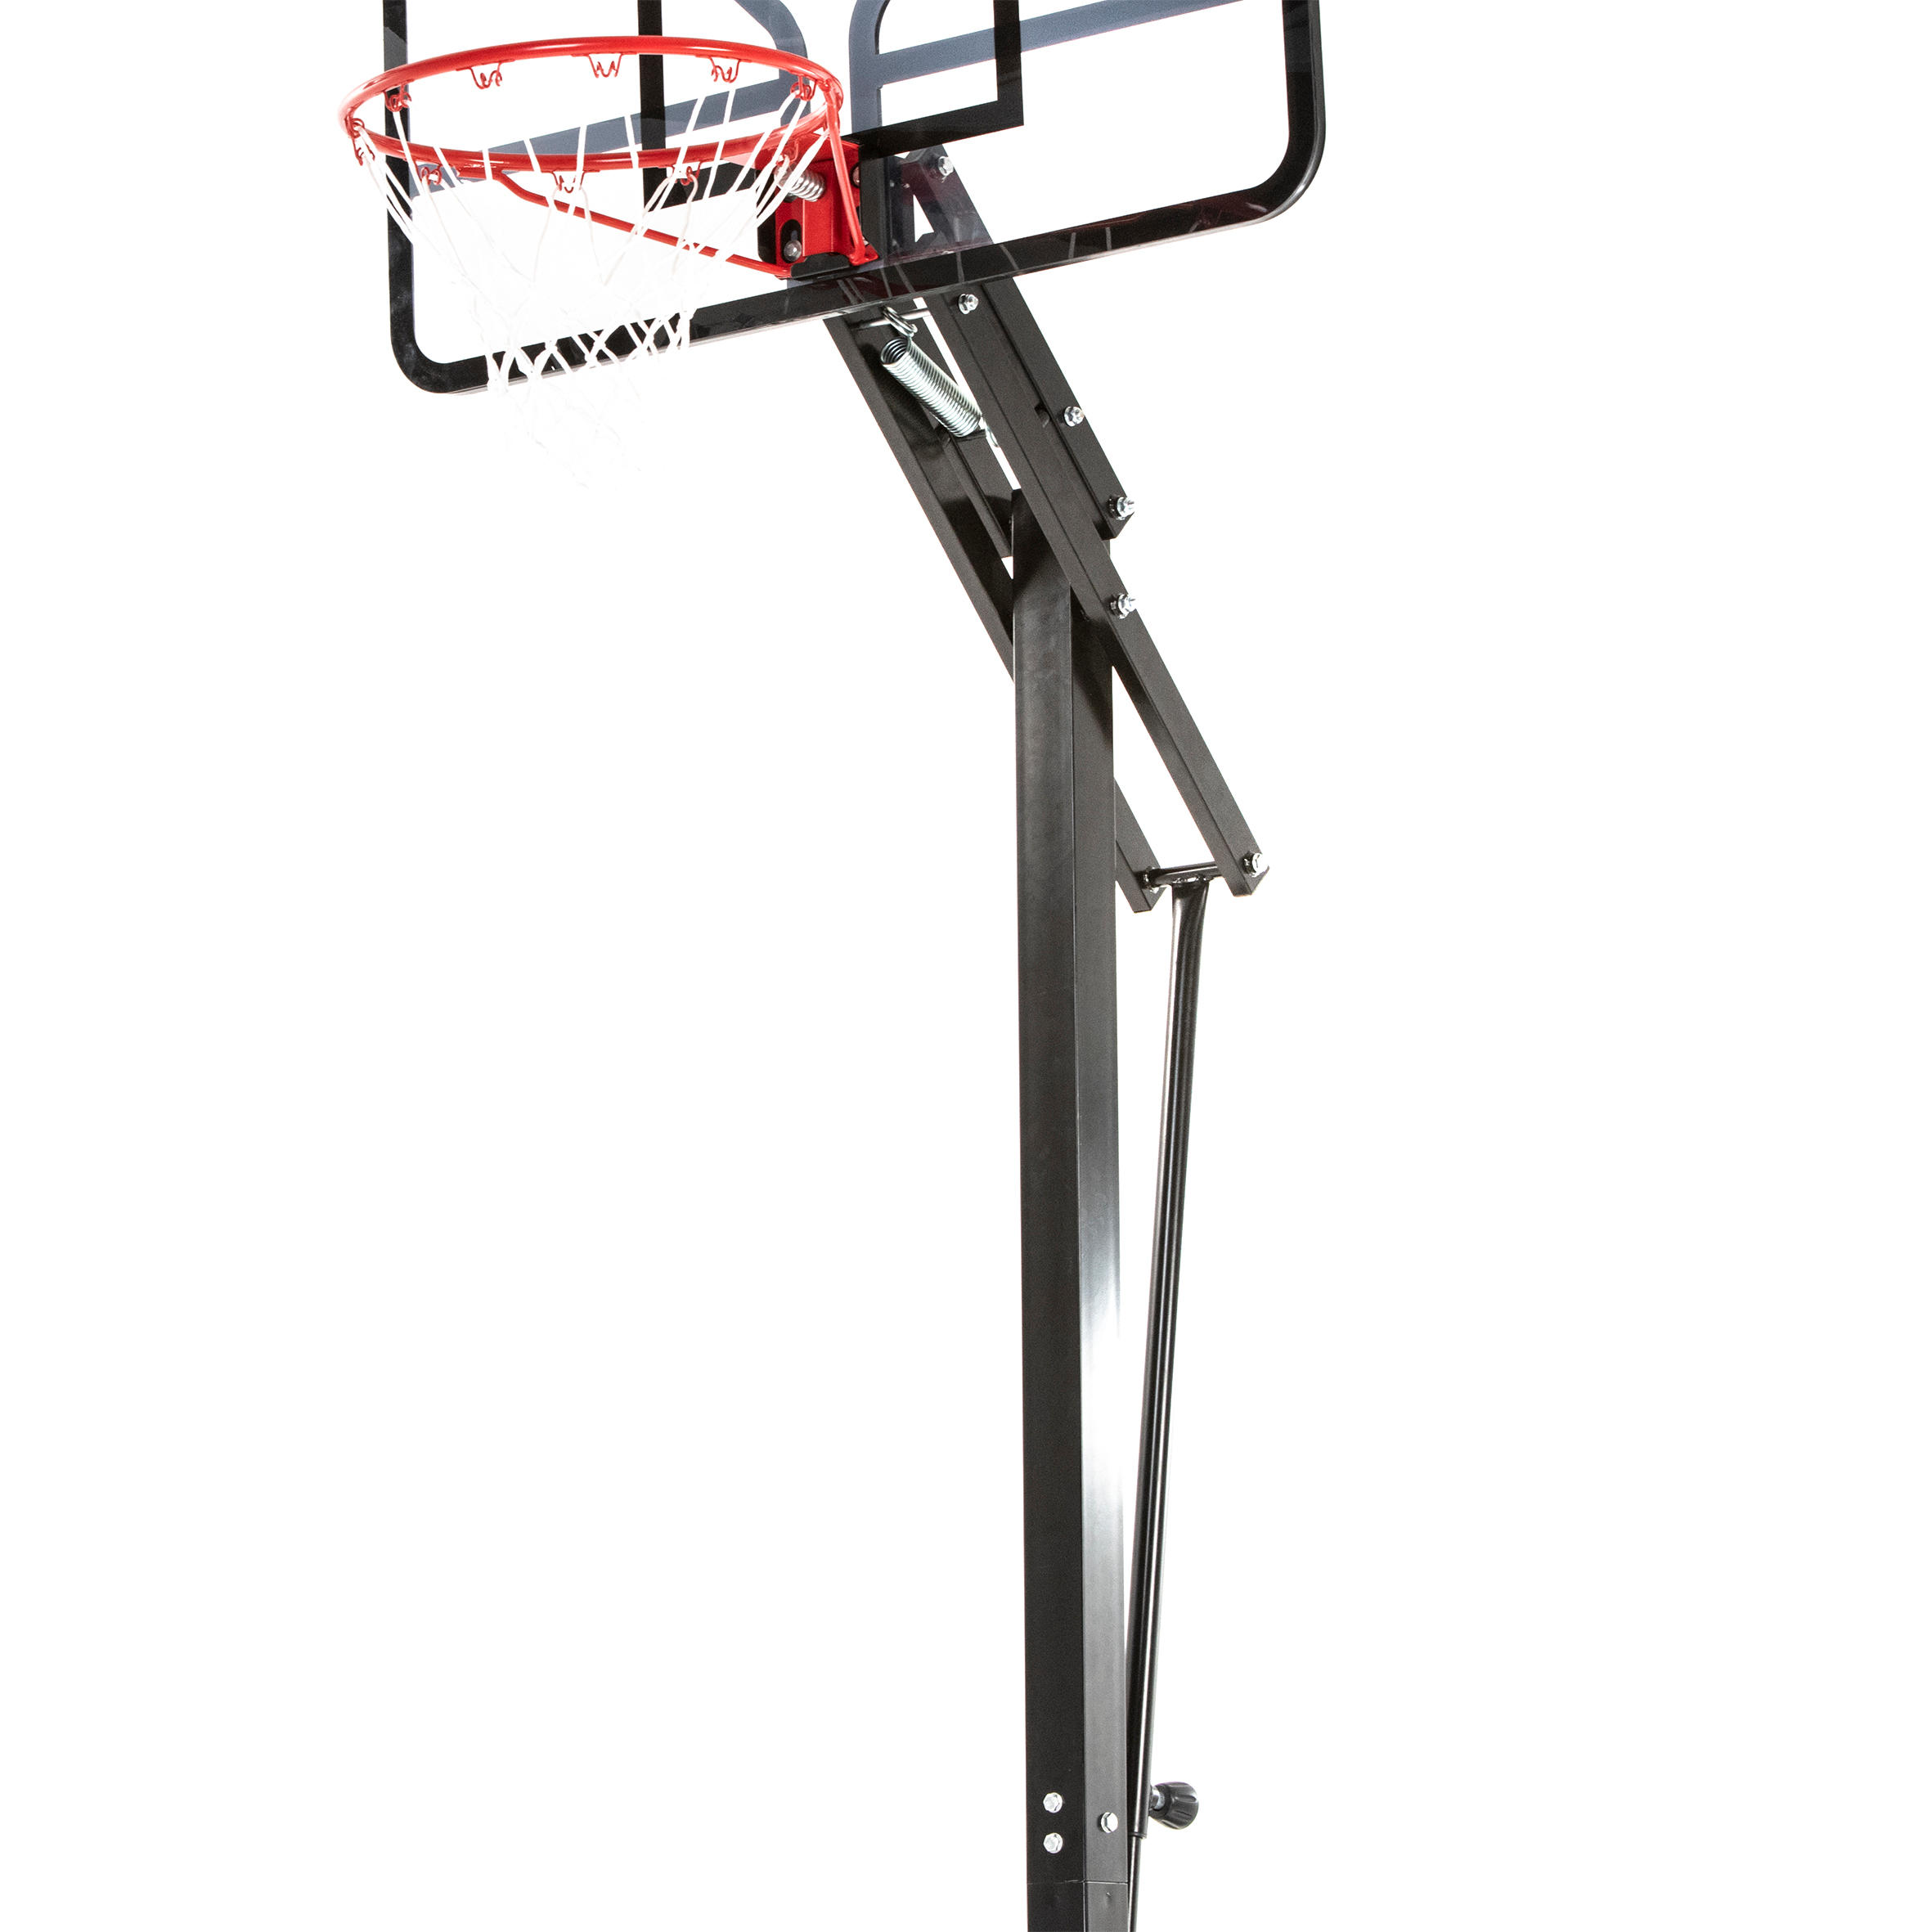 overal hypothese in verlegenheid gebracht Basketbalpaal B700 Pro (2.40 - 3.05 meter) | TARMAK | Decathlon.nl